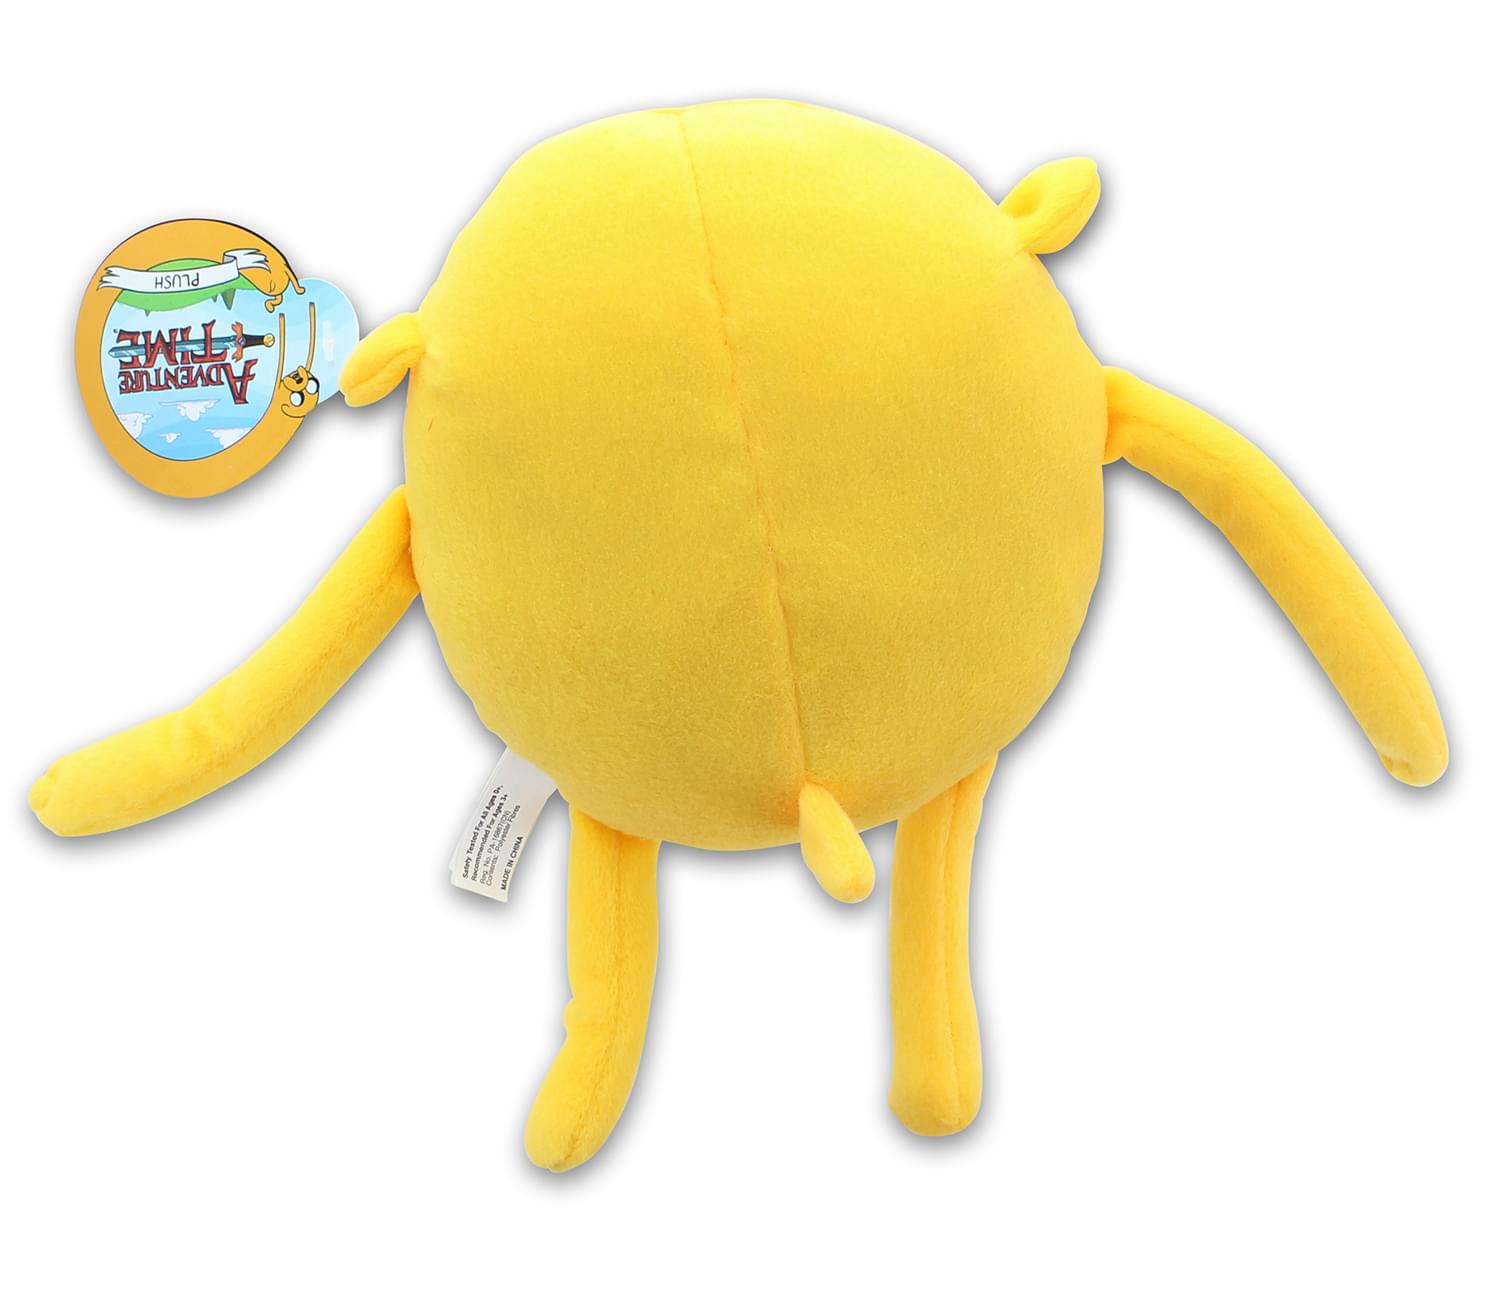 Adventure Time 9 Inch Stuffed Character Plish | Jake the Dog